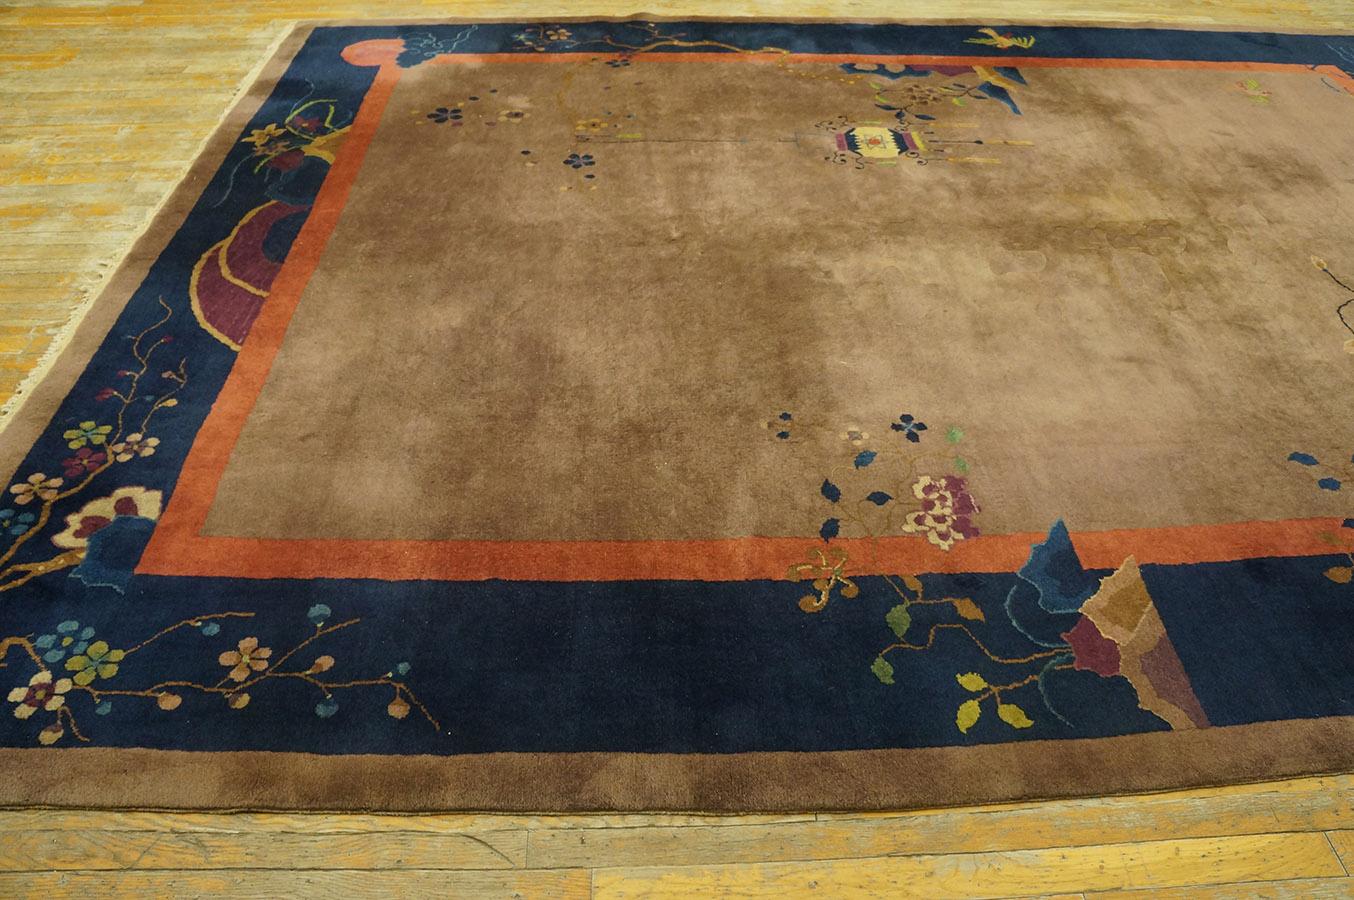 1920s Chinese Art Deco Carpet ( 9' x 12' - 275 x 365 cm ) For Sale 1